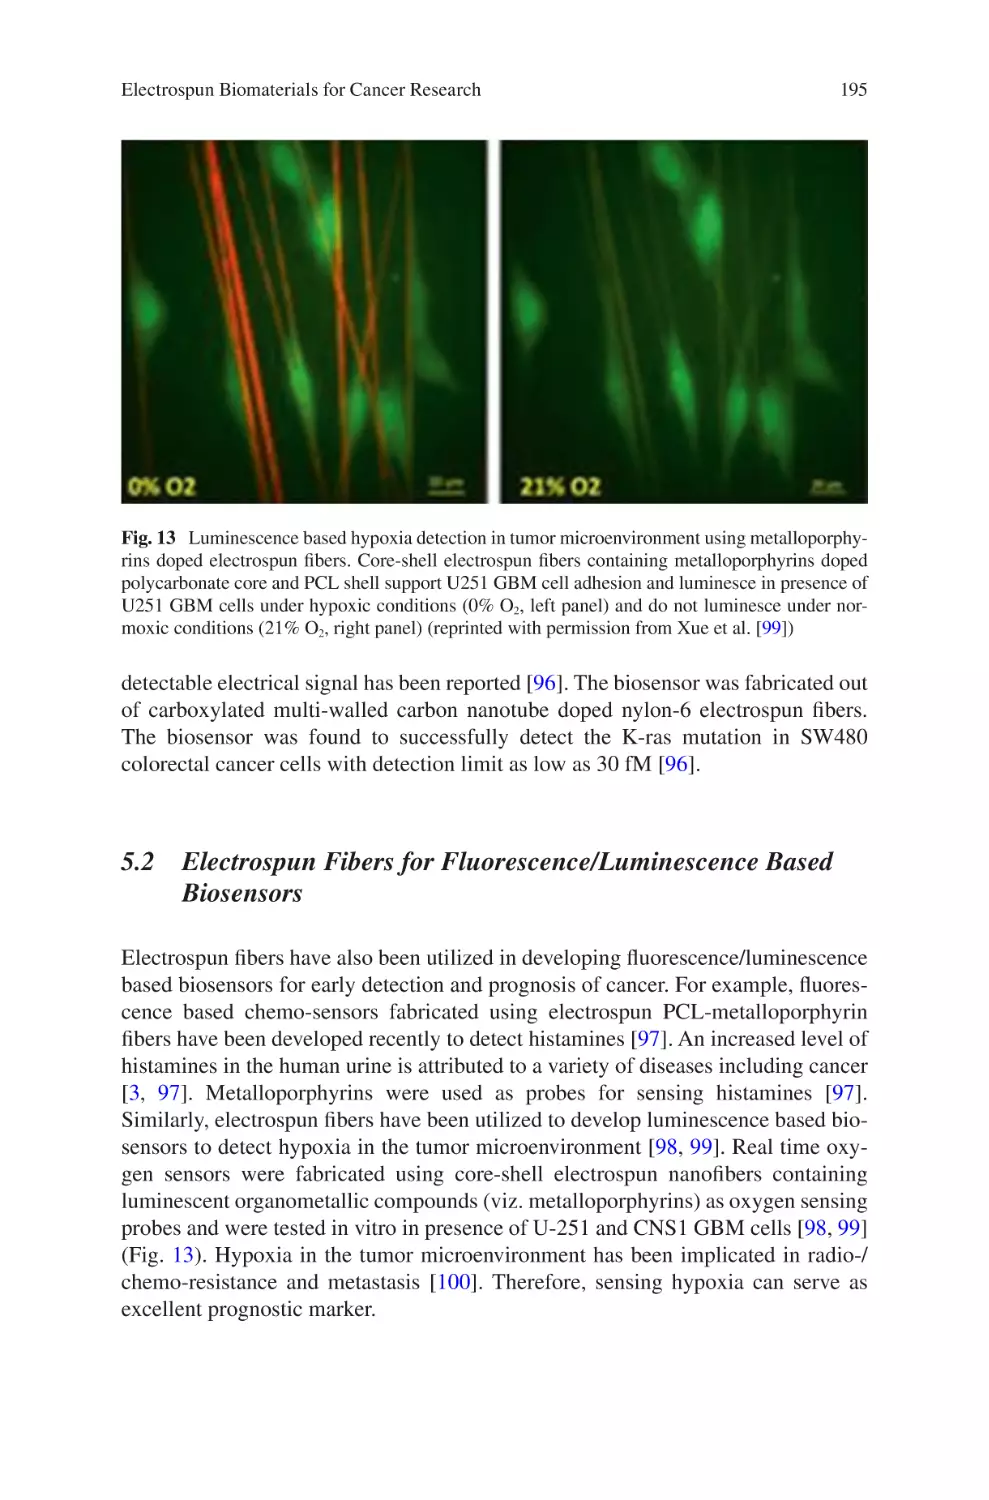 5.2 Electrospun Fibers for Fluorescence/Luminescence Based Biosensors